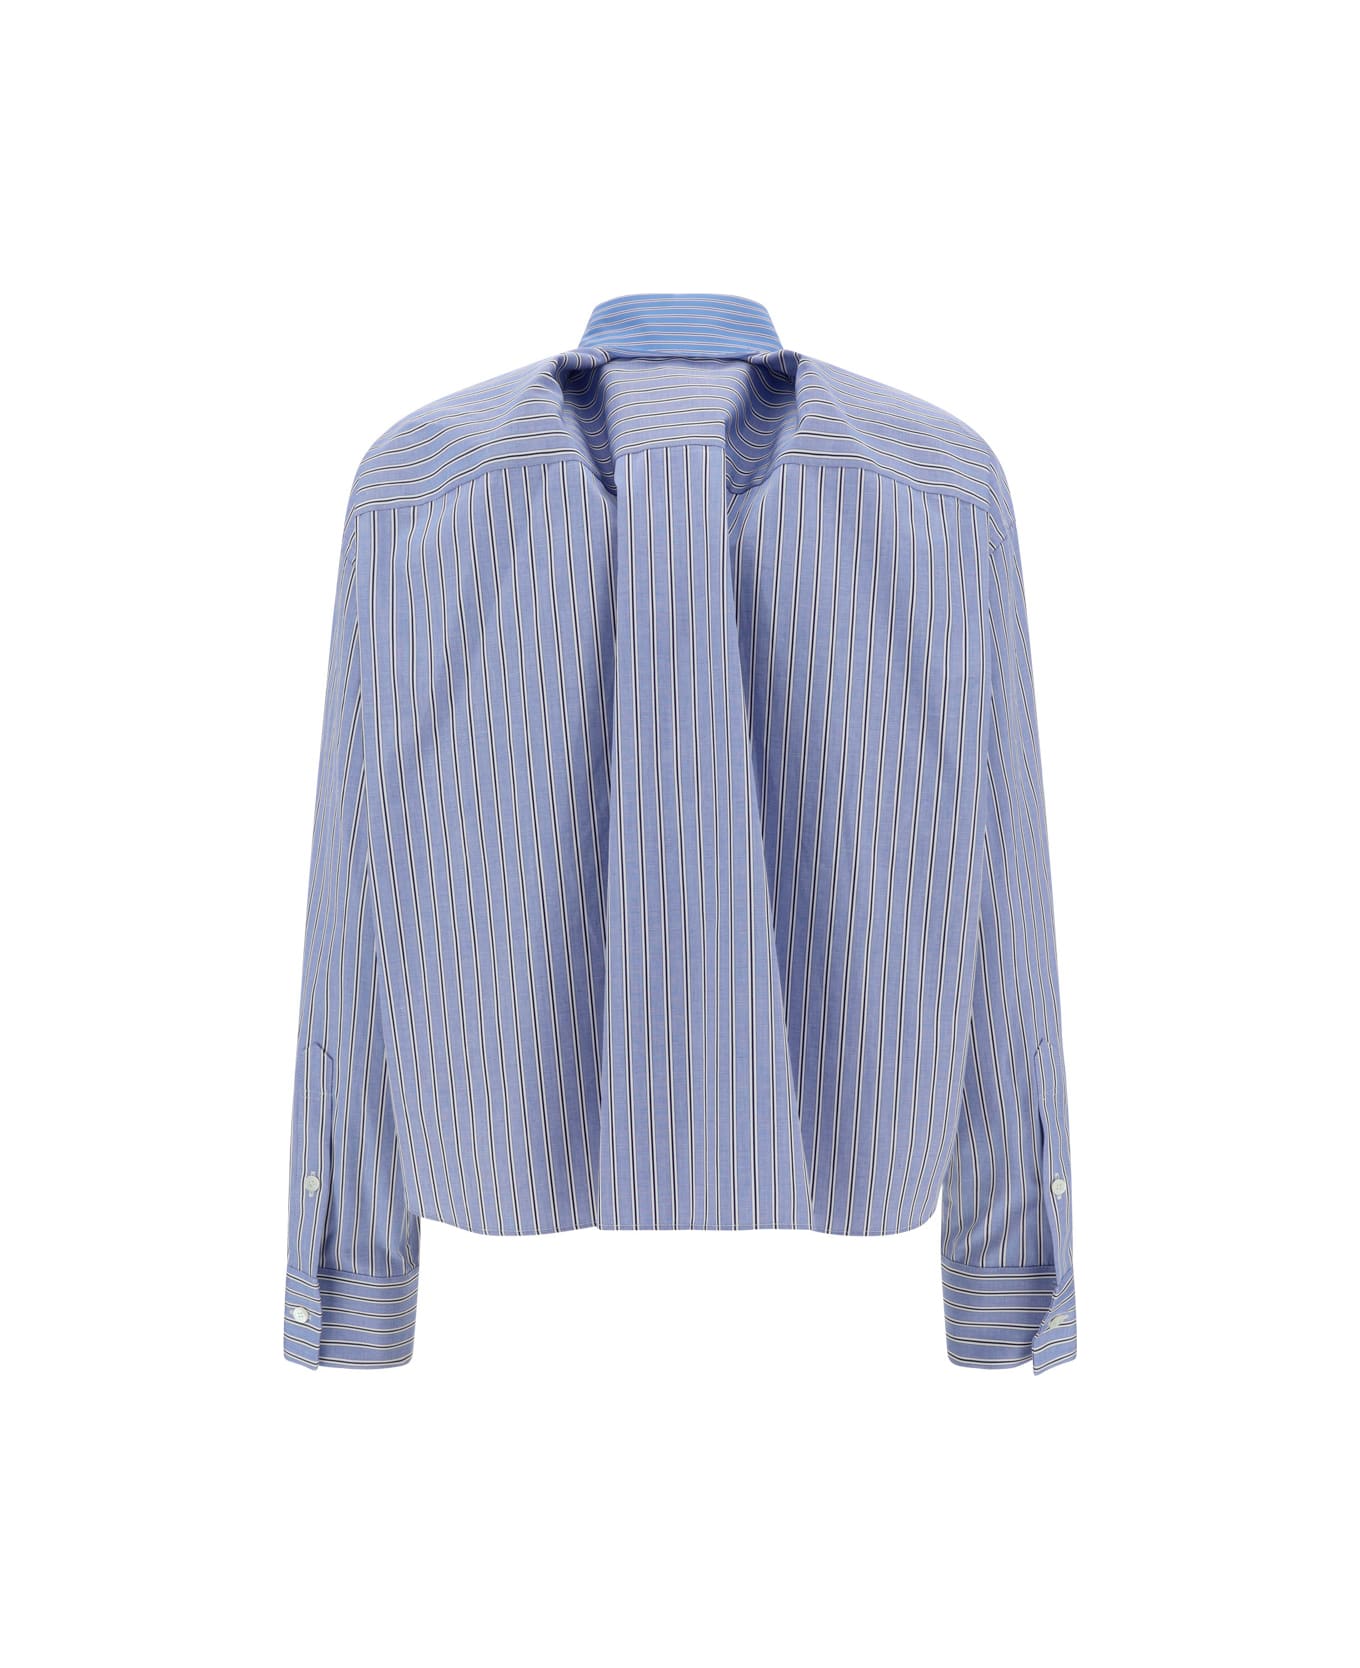 Sacai Thomas Mason Shirt - L.blue Stripe